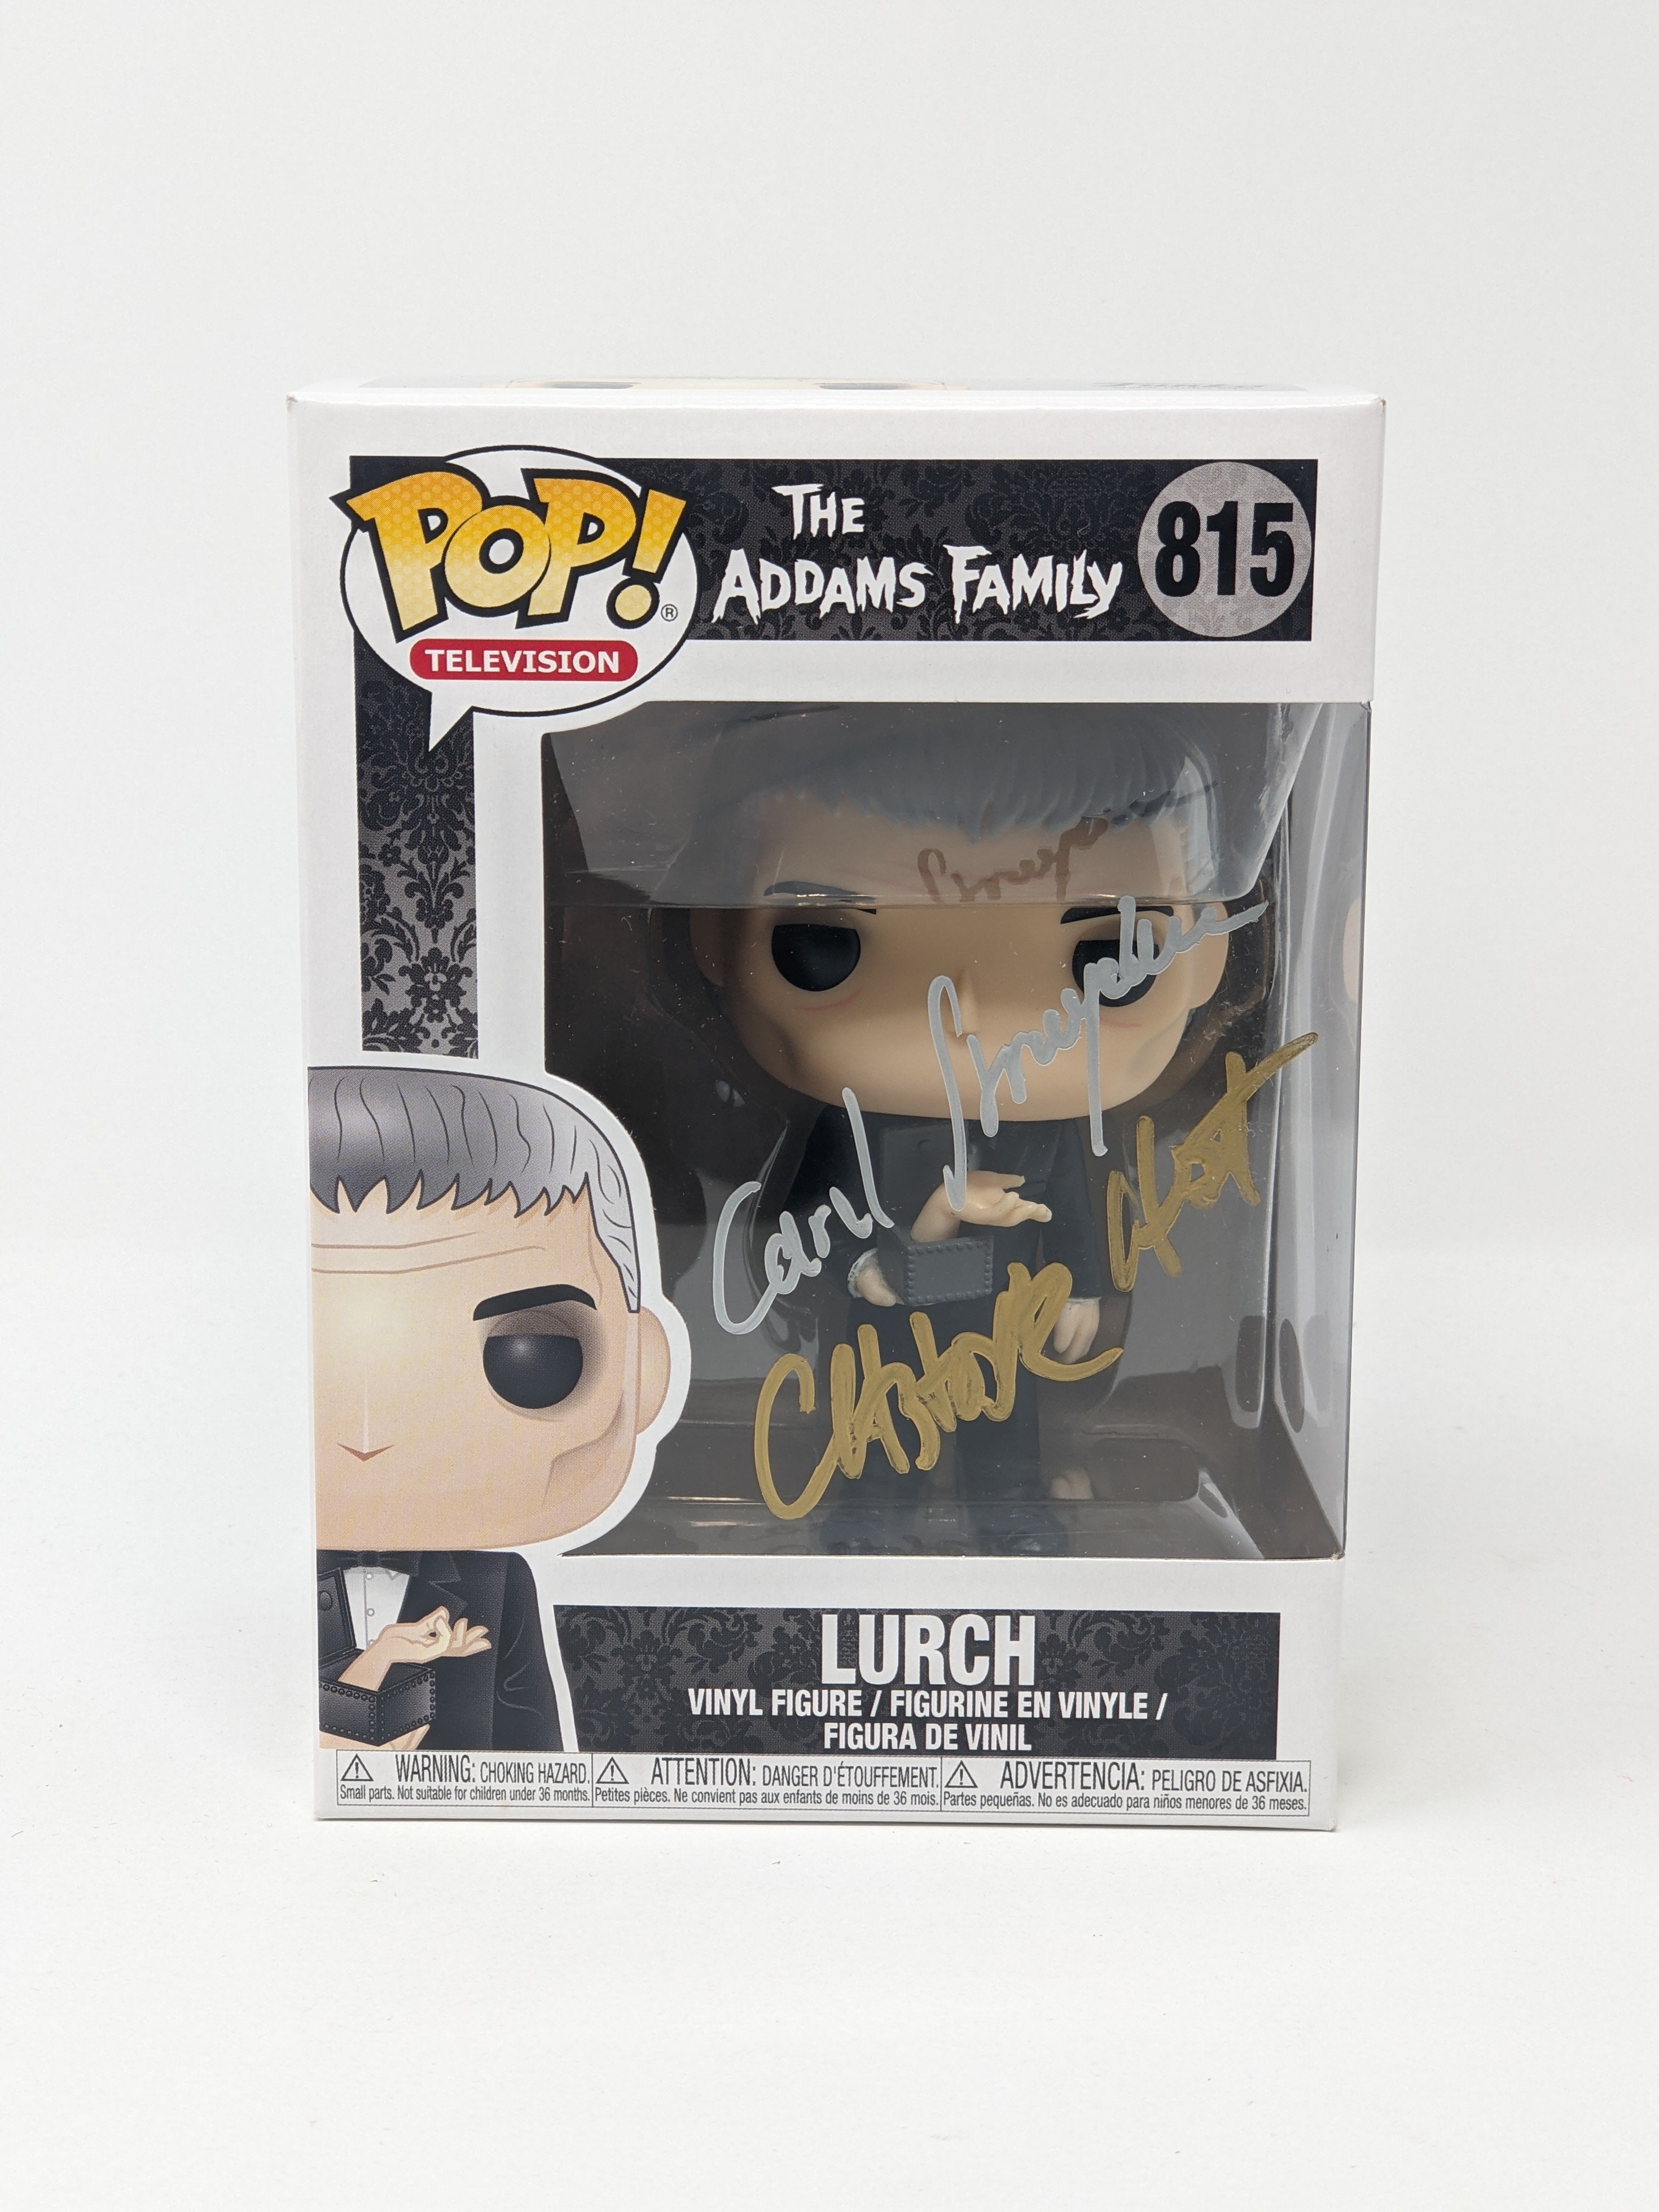 Addams Family Lurch #815 Cast x2 Hart Struycken Signed Funko Pop JSA COA Certified Autograph GalaxyCon